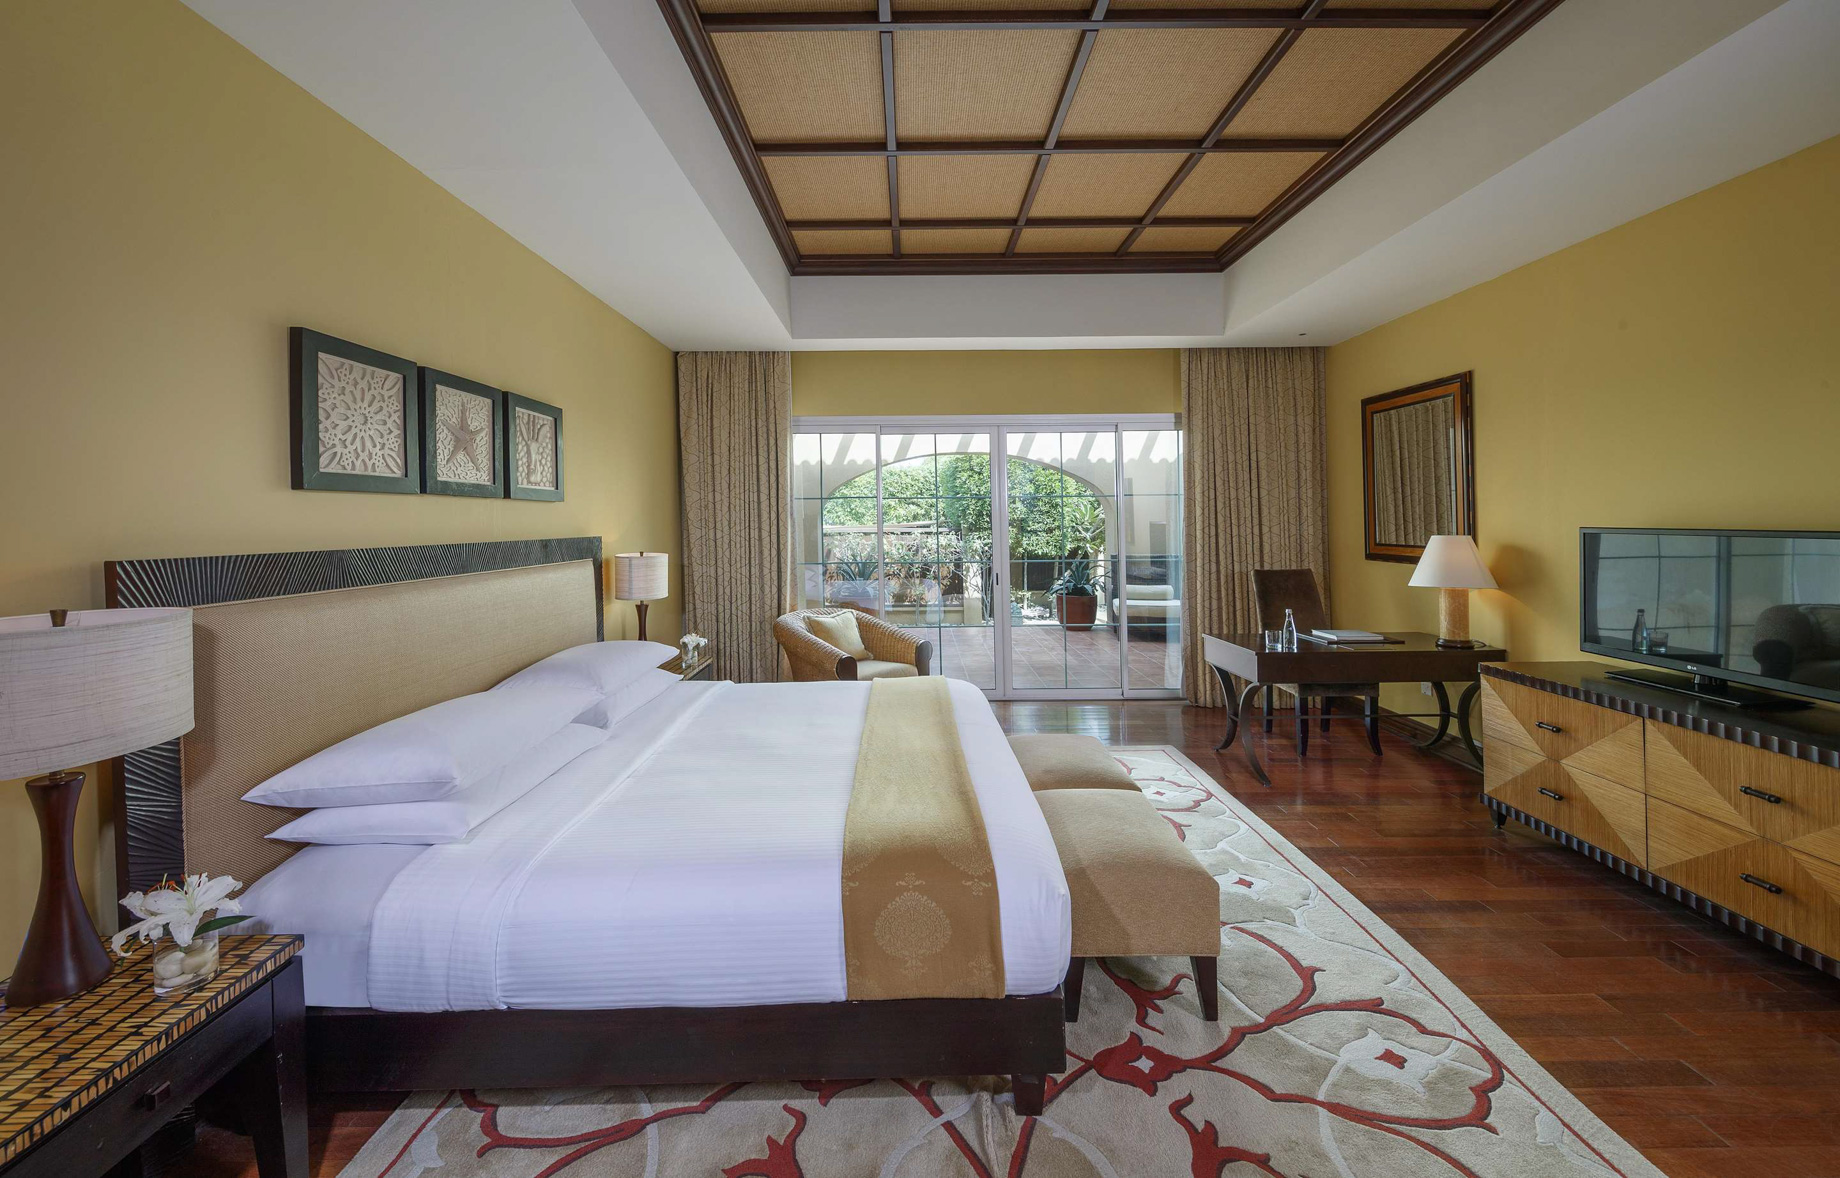 Desert Islands Resort & Spa by Anantara – Abu Dhabi – United Arab Emirates – One Bedroom Anantara Villa